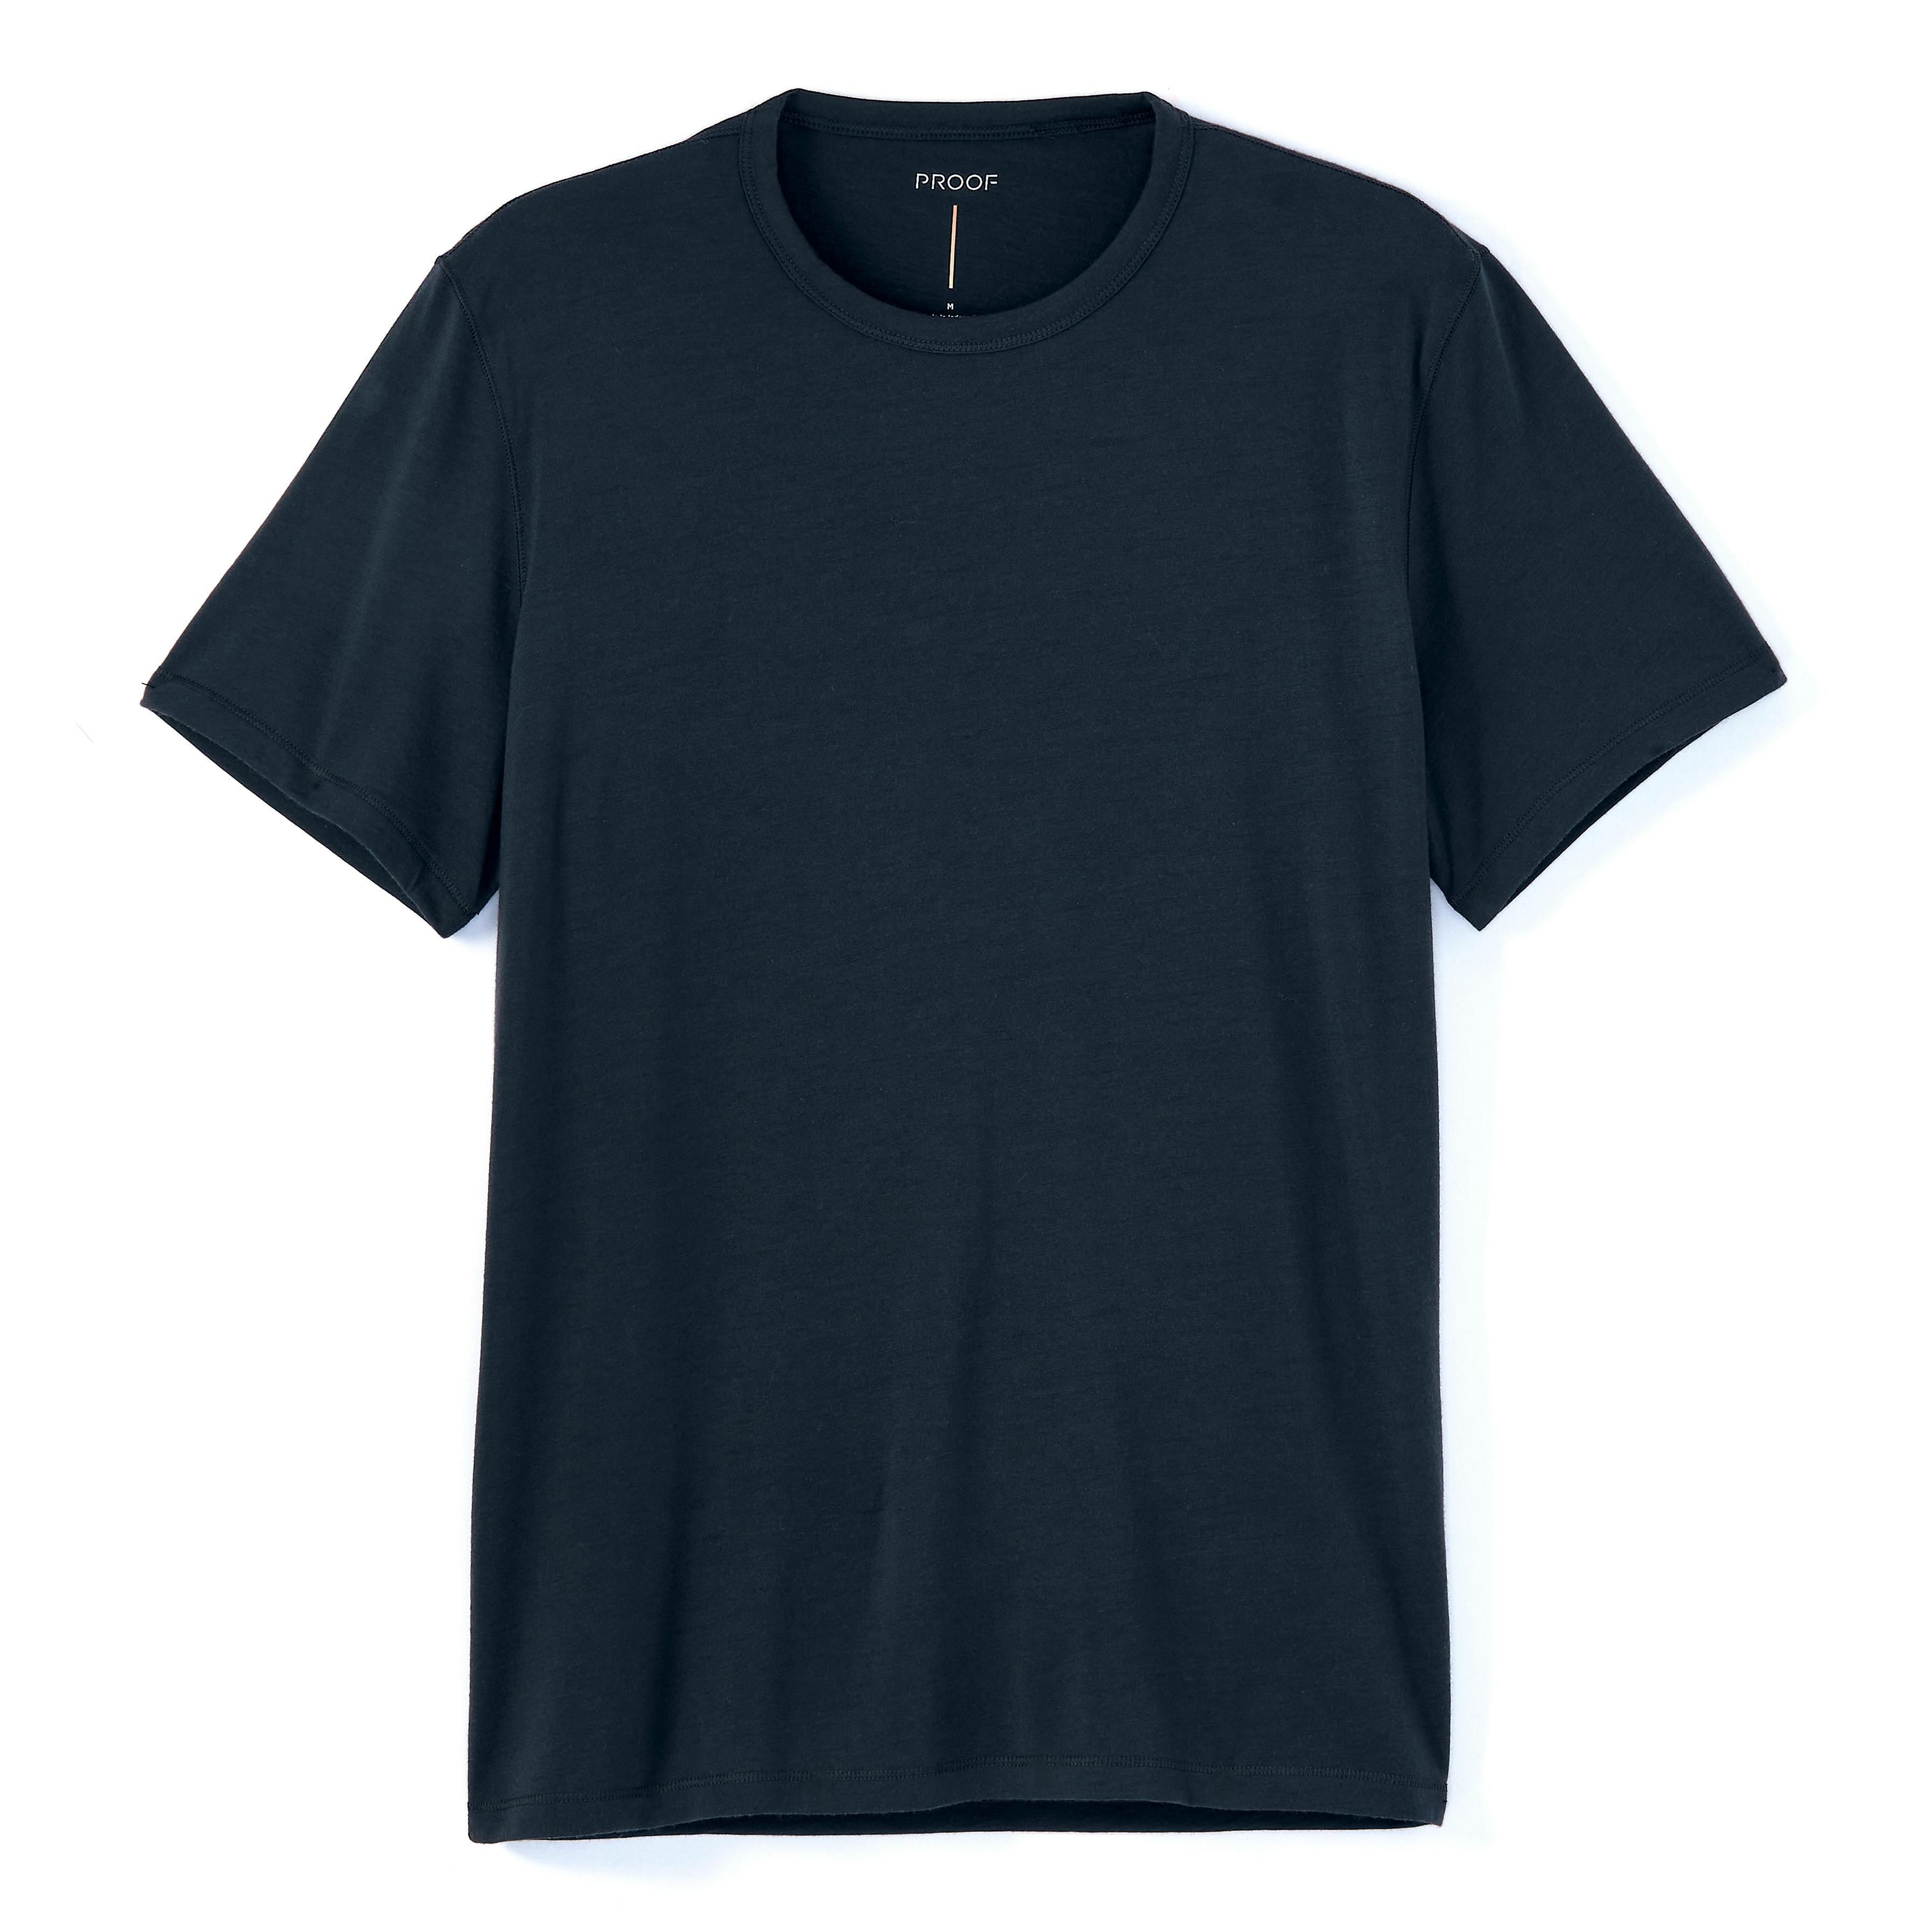 NILLLY Casual Tops for Women Fit Women's Plus Size Big Chest T-Shirt Shirt  Short SleeveT-Shirt Shirt Top Ladies Top Black / S 